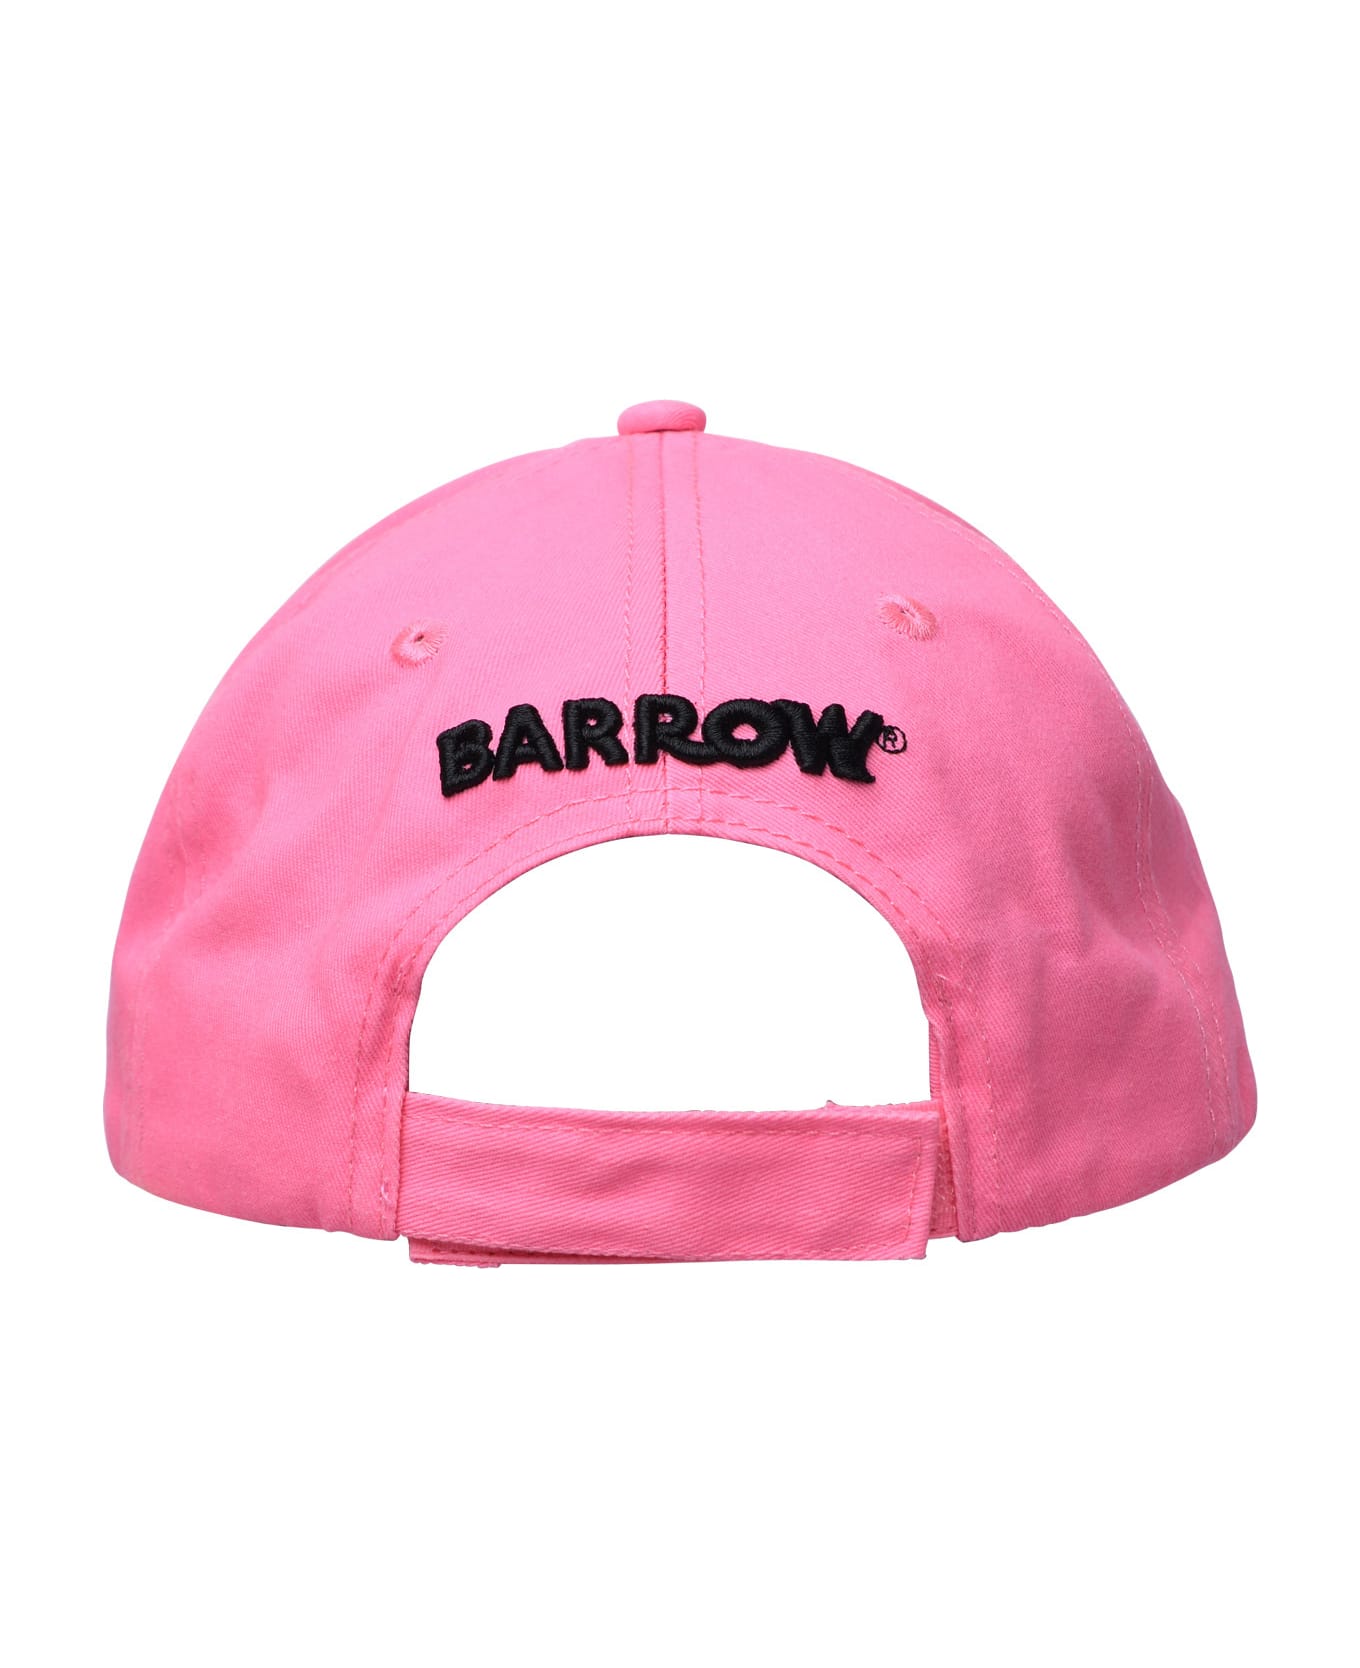 Barrow Fuchsia Cotton Hat - Hot Pink